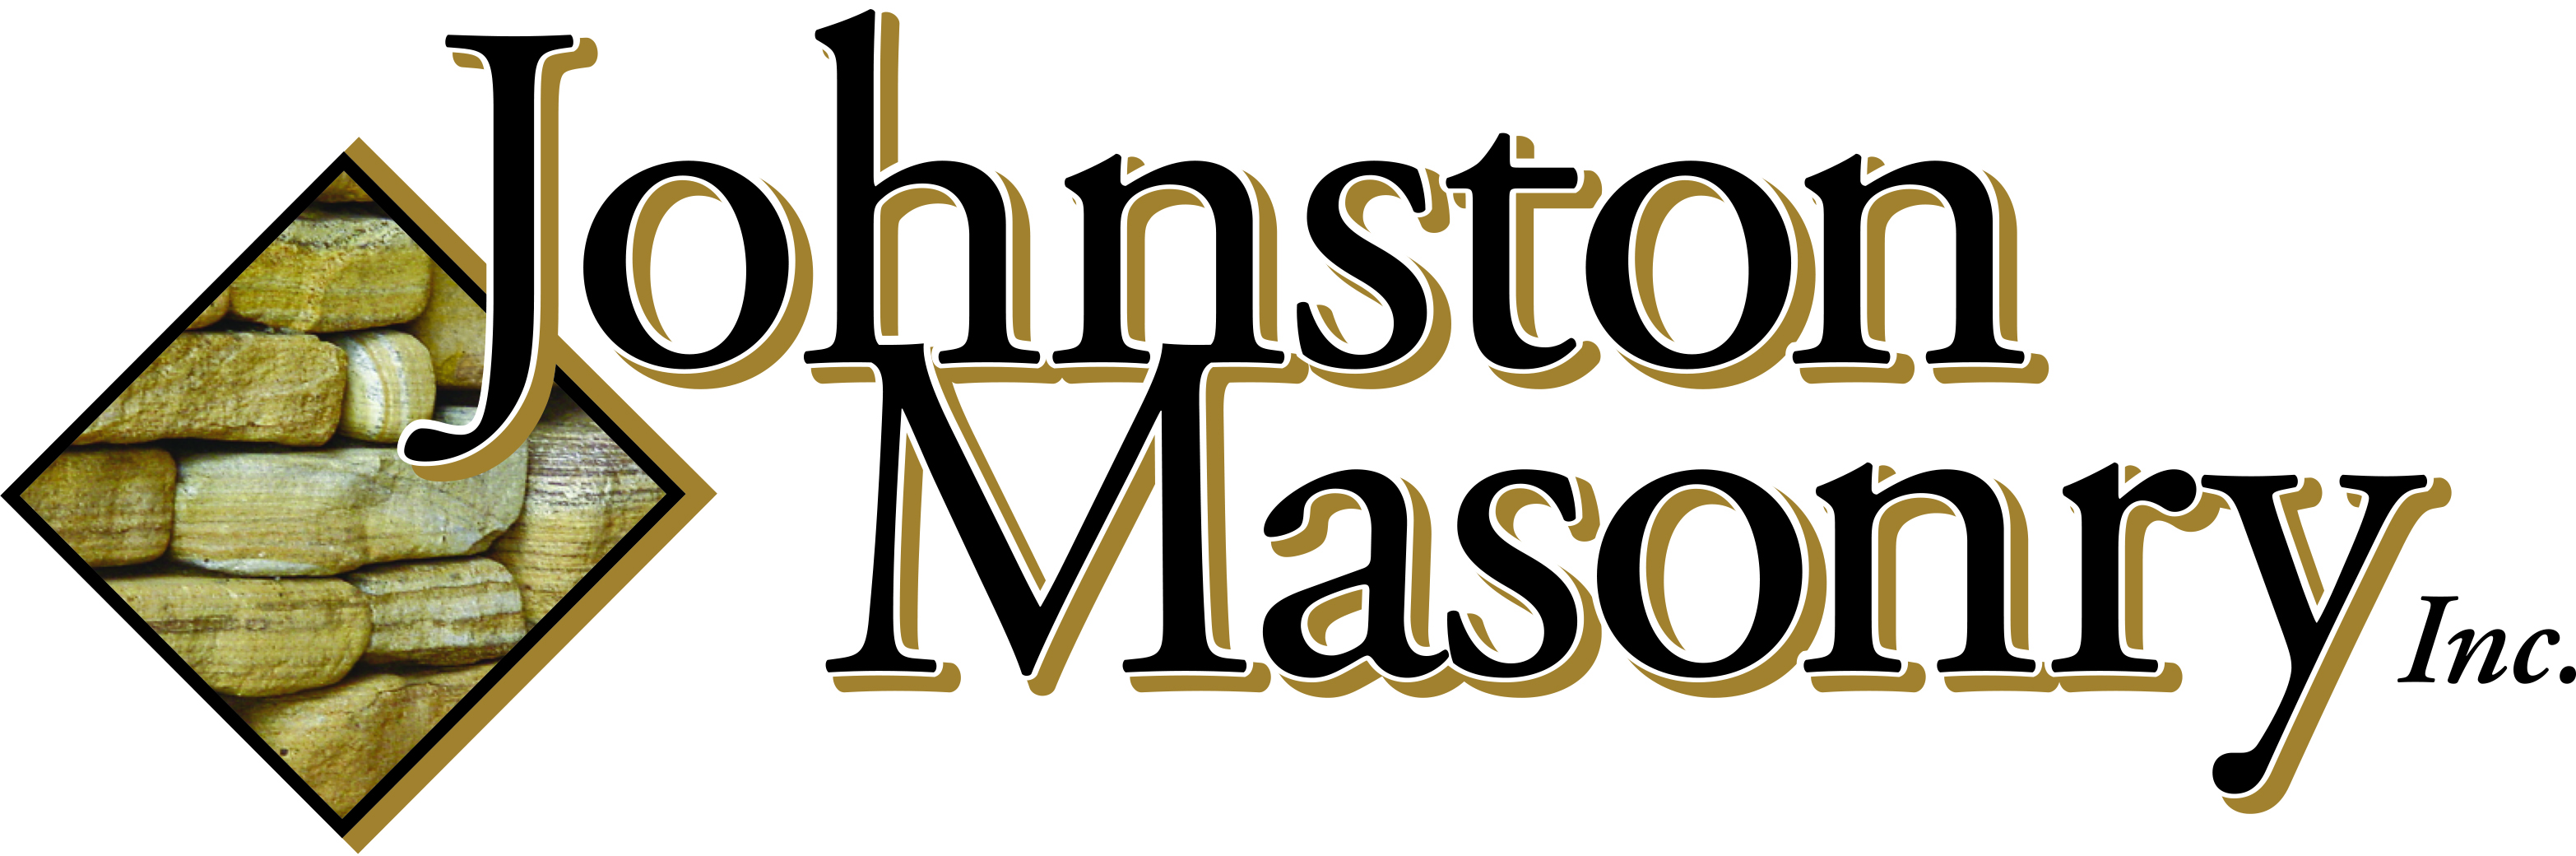 Johnston Masonry Inc.  Logo